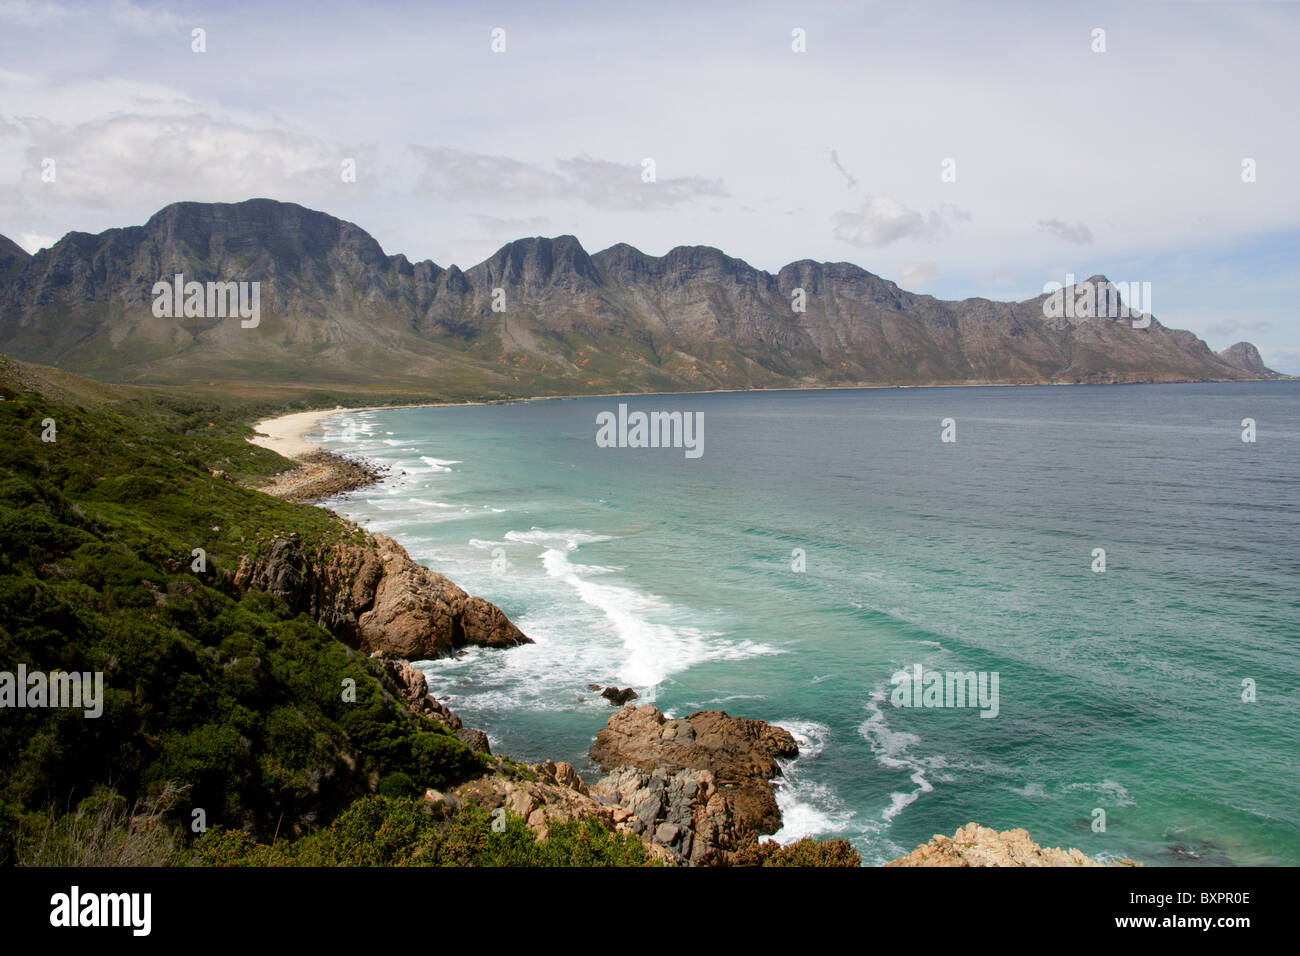 Scintille Koeelbaai Bay e Ottentotti Holland Mountain Range, Western Cape, Sud Africa. Vista dall'R44 autostrada. Foto Stock